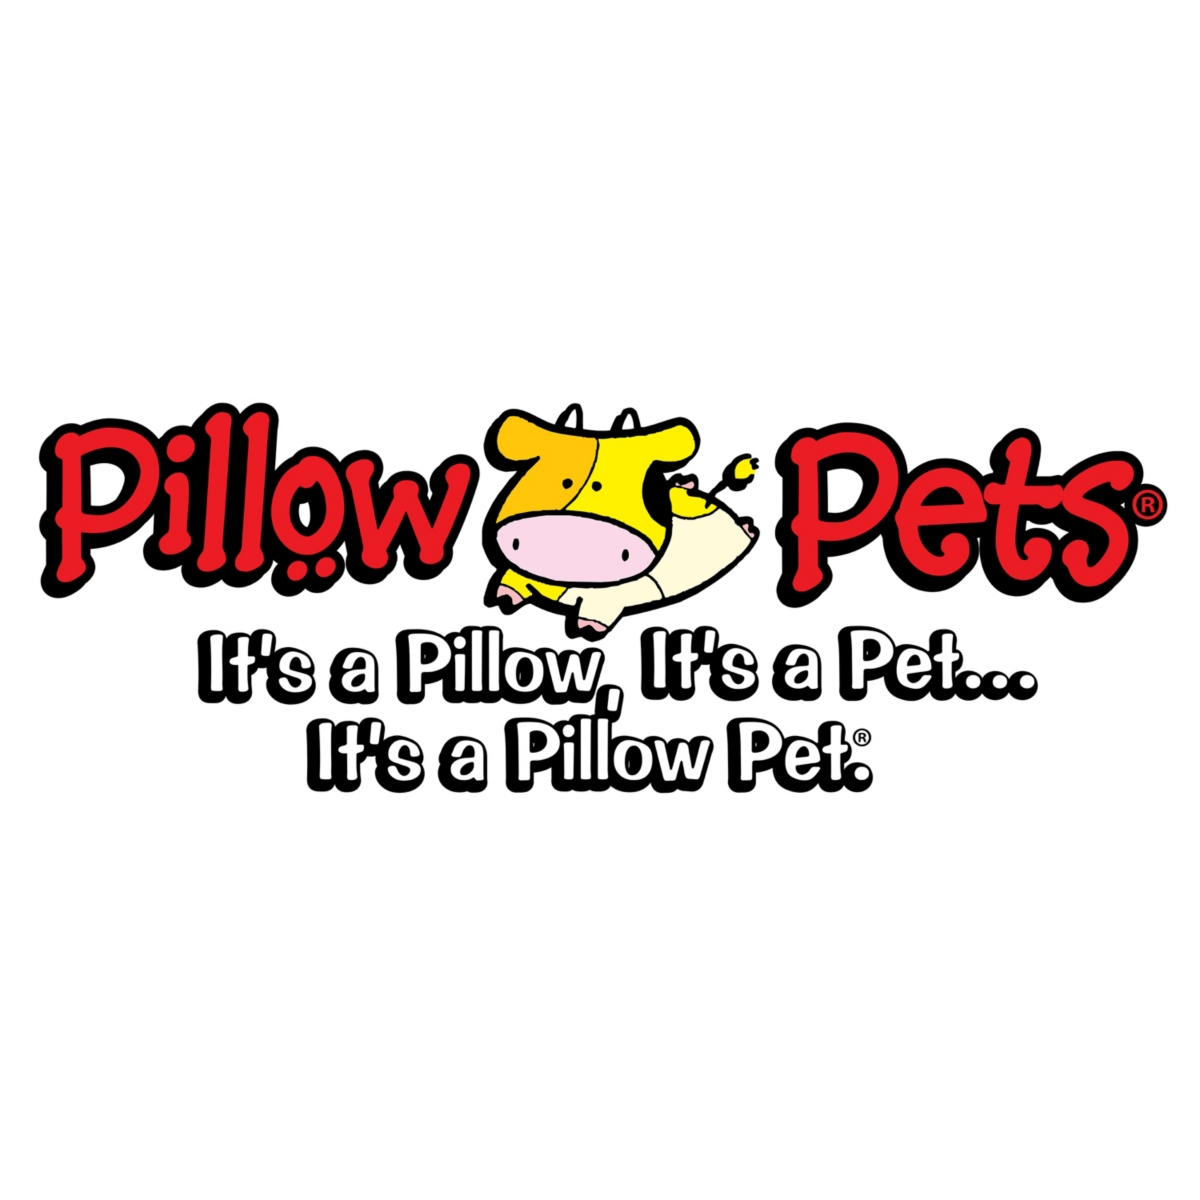 Shop Pillow Pets Disney Puppy Dog Pals Rolly Stuffed Animal Plush Toy In Medium Bro